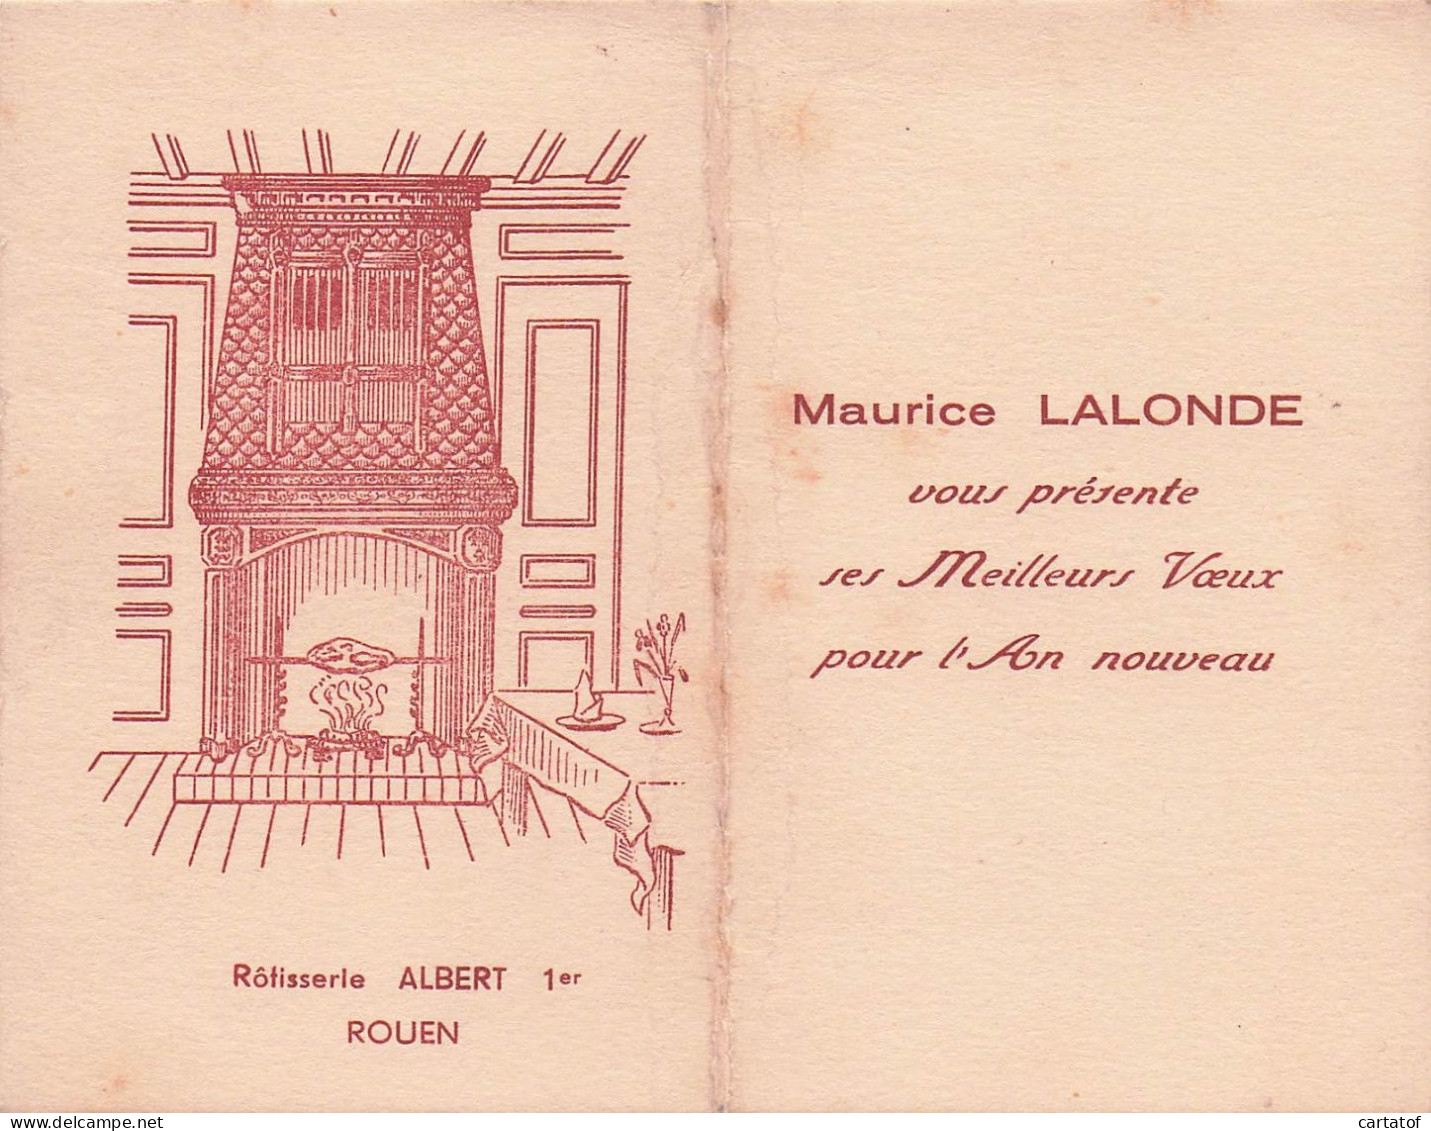 Rotisserie ALBERT 1er  ROUEN . Maurice LALONDE Présente Ses Meilleurs Vœux - Cartas De Hotels